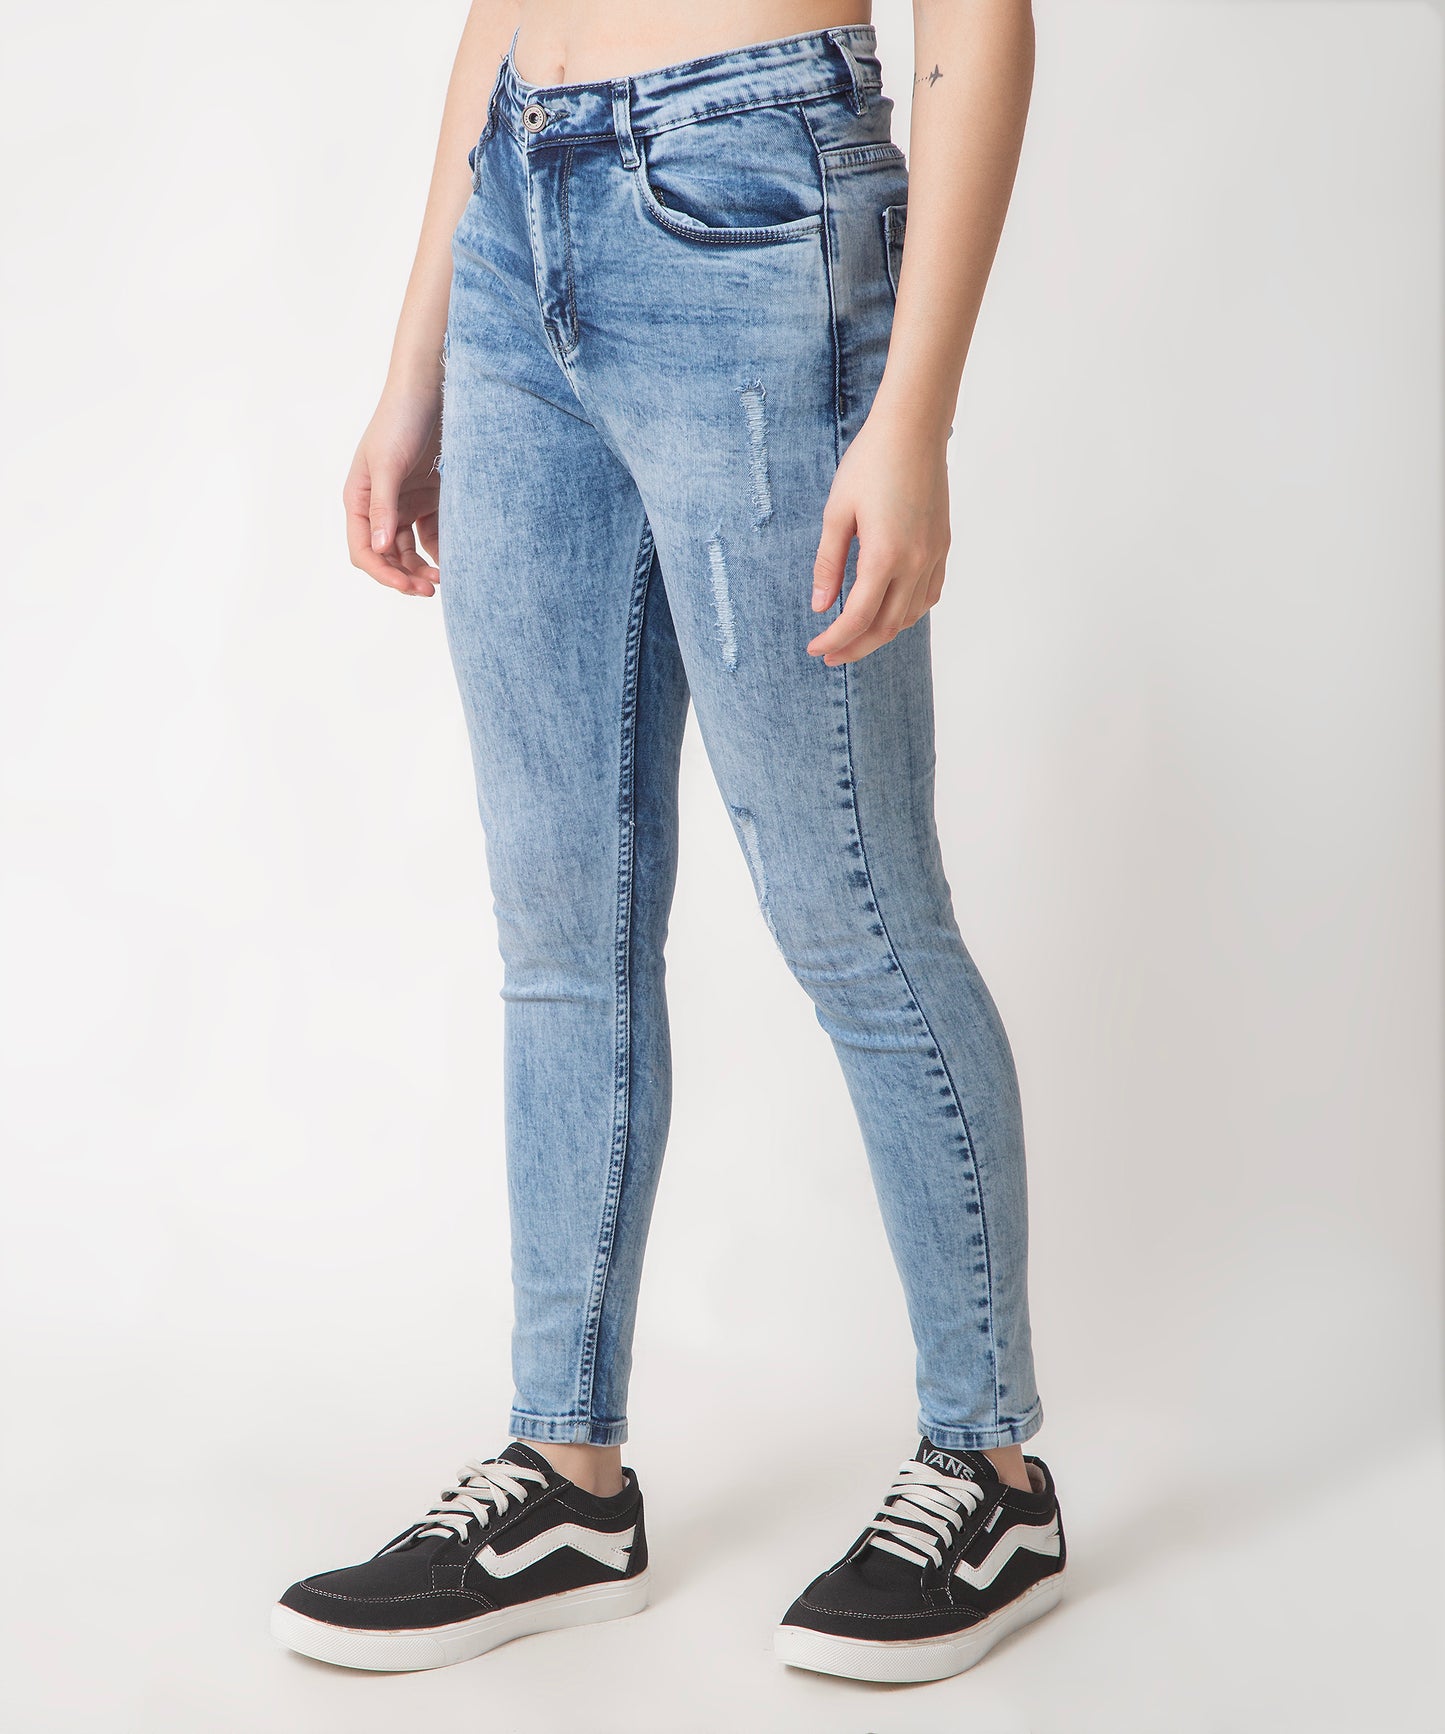 Women Classy Light Blue Denim Jeans